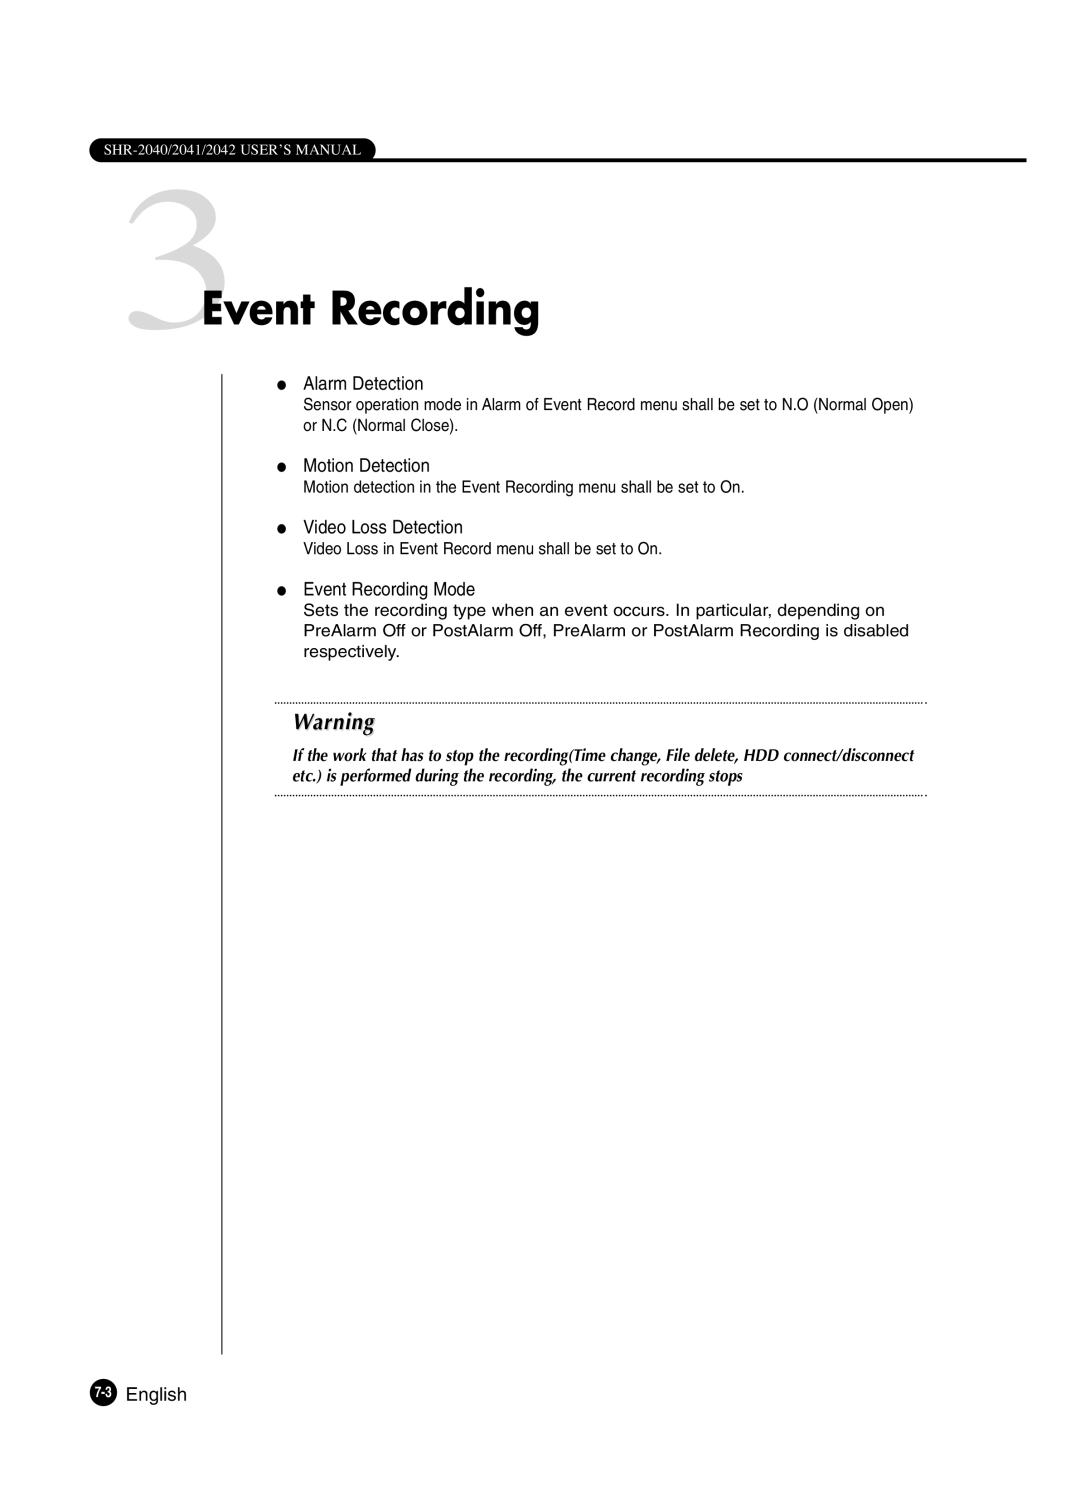 Samsung SHR-2042P250 manual 3Event Recording, Alarm Detection, Motion Detection, Video Loss Detection, Event Recording Mode 